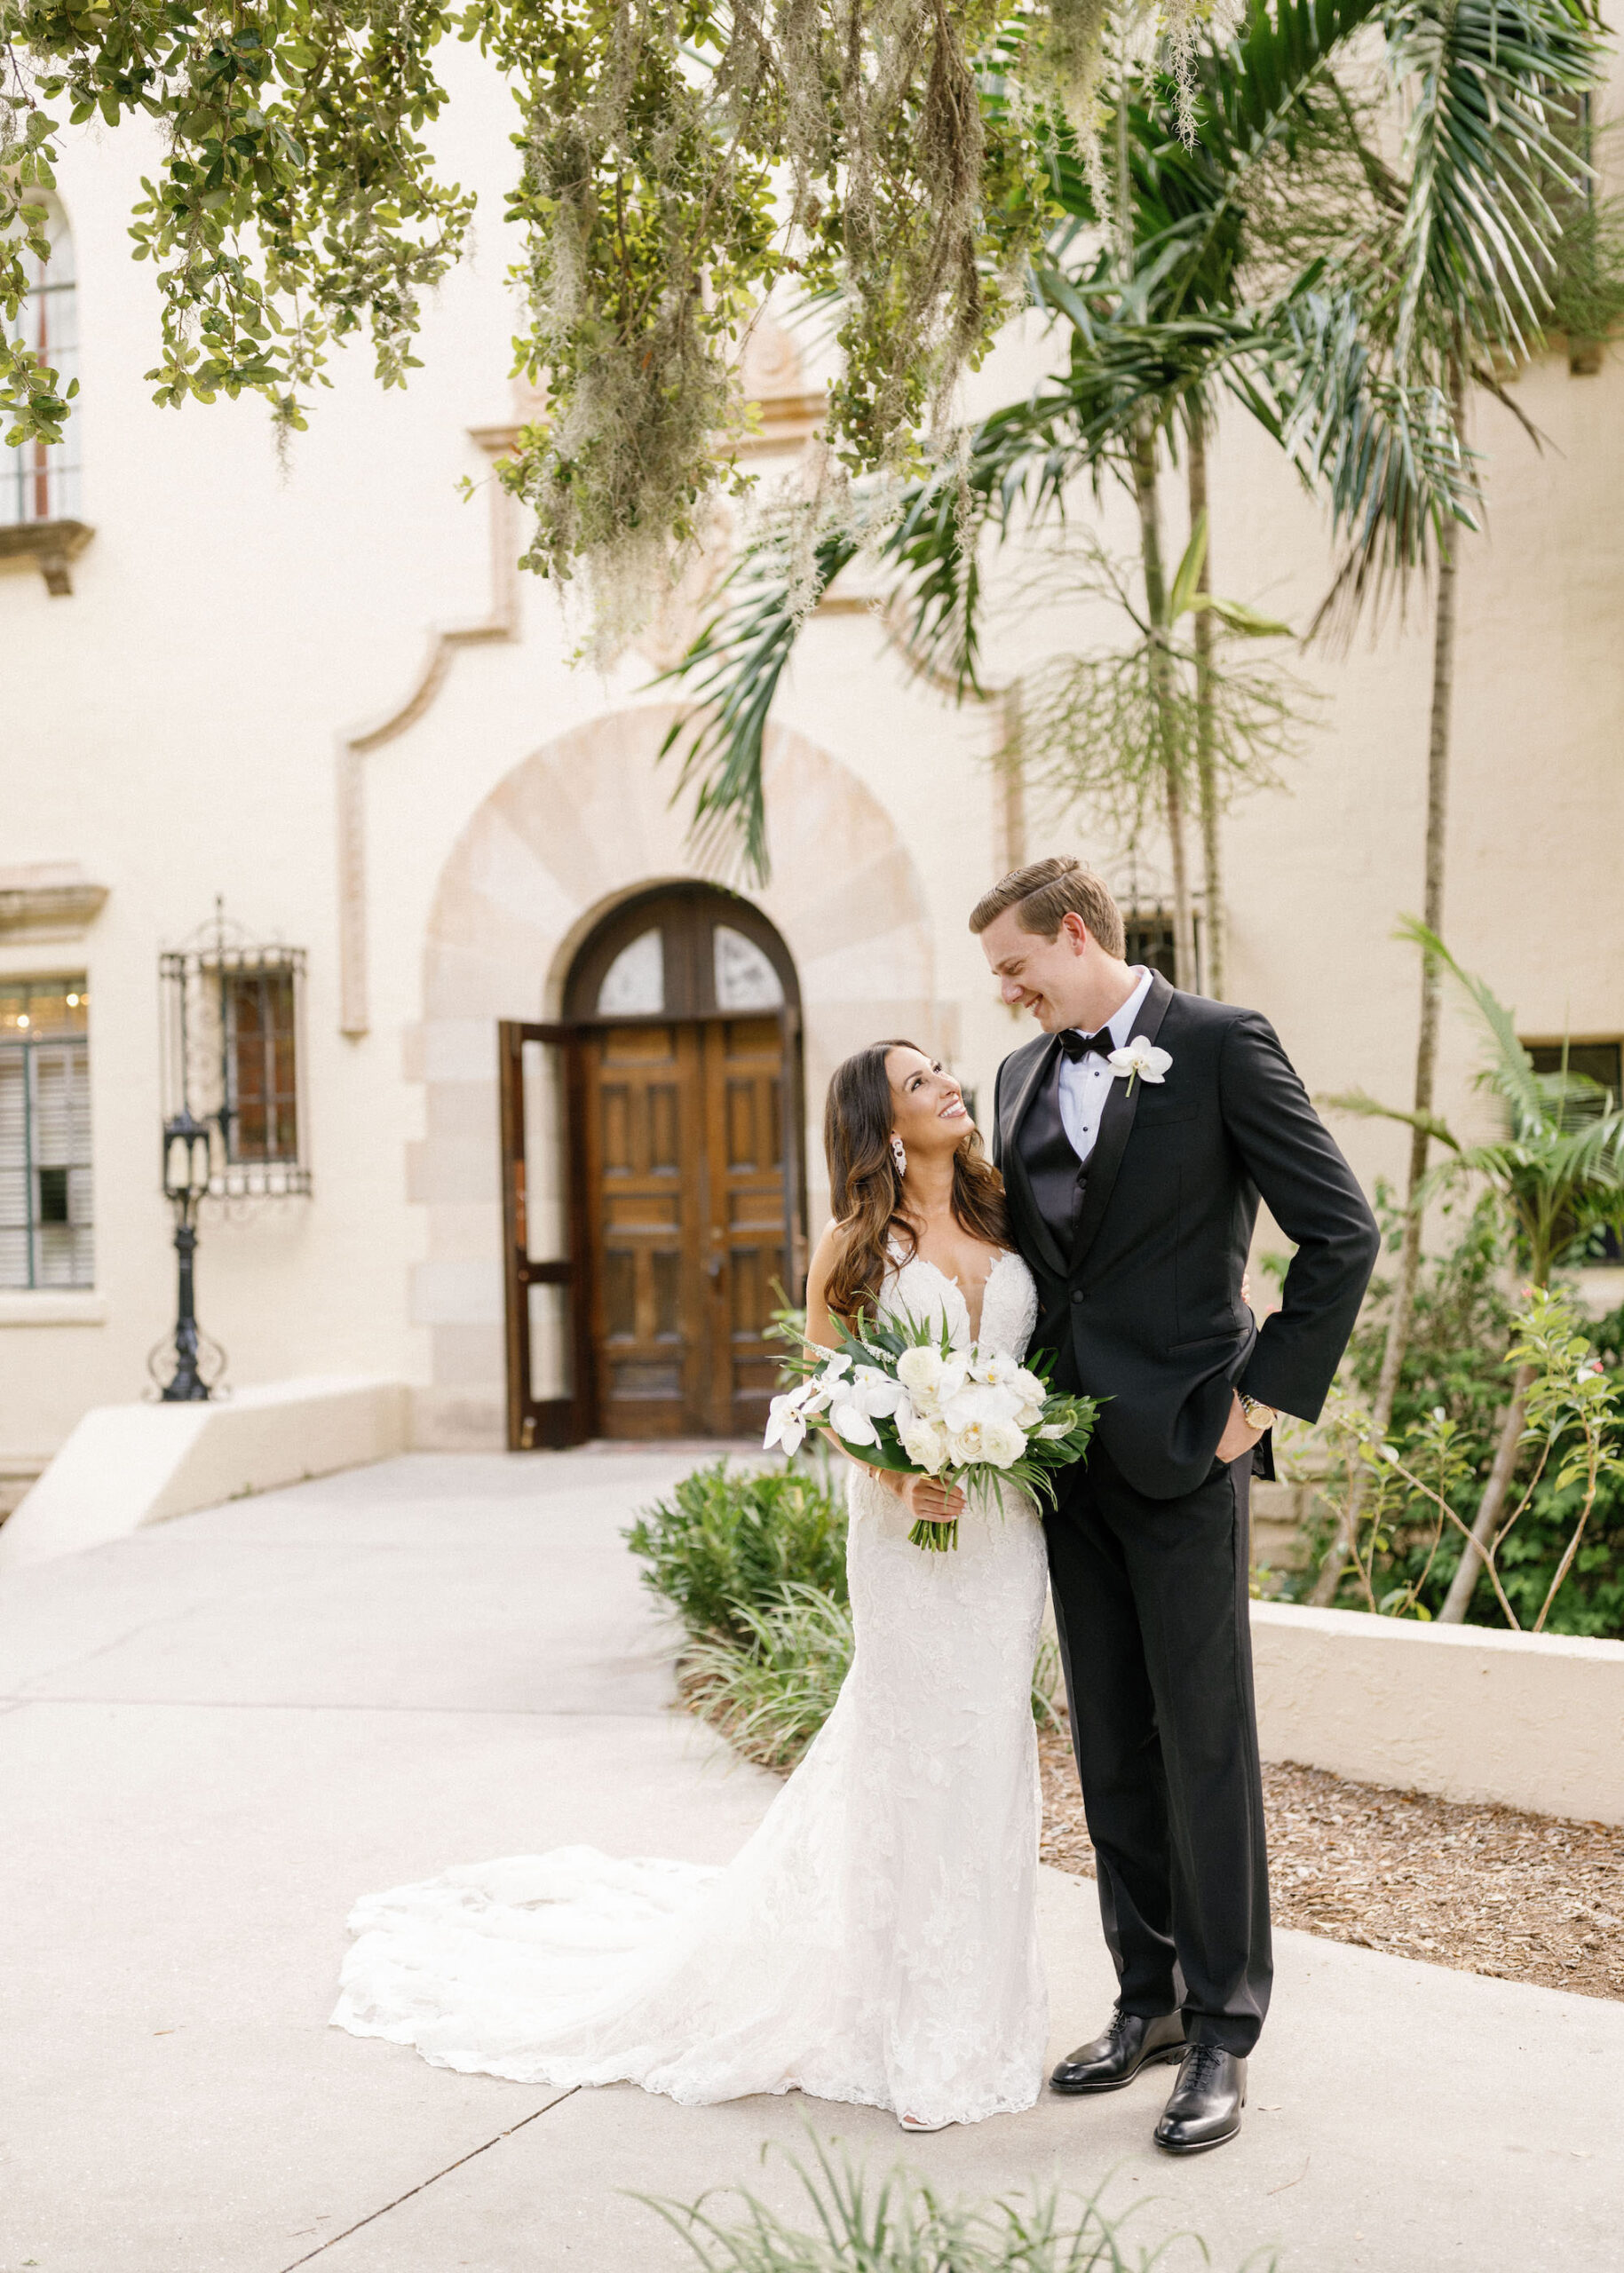 Luxurious Classic Bride and Groom in Black Tuxedo Wedding Portrait | St. Pete Wedding Venue Powel Crosley Estate | Tampa Bay Wedding Florist Botanica International Design Studio